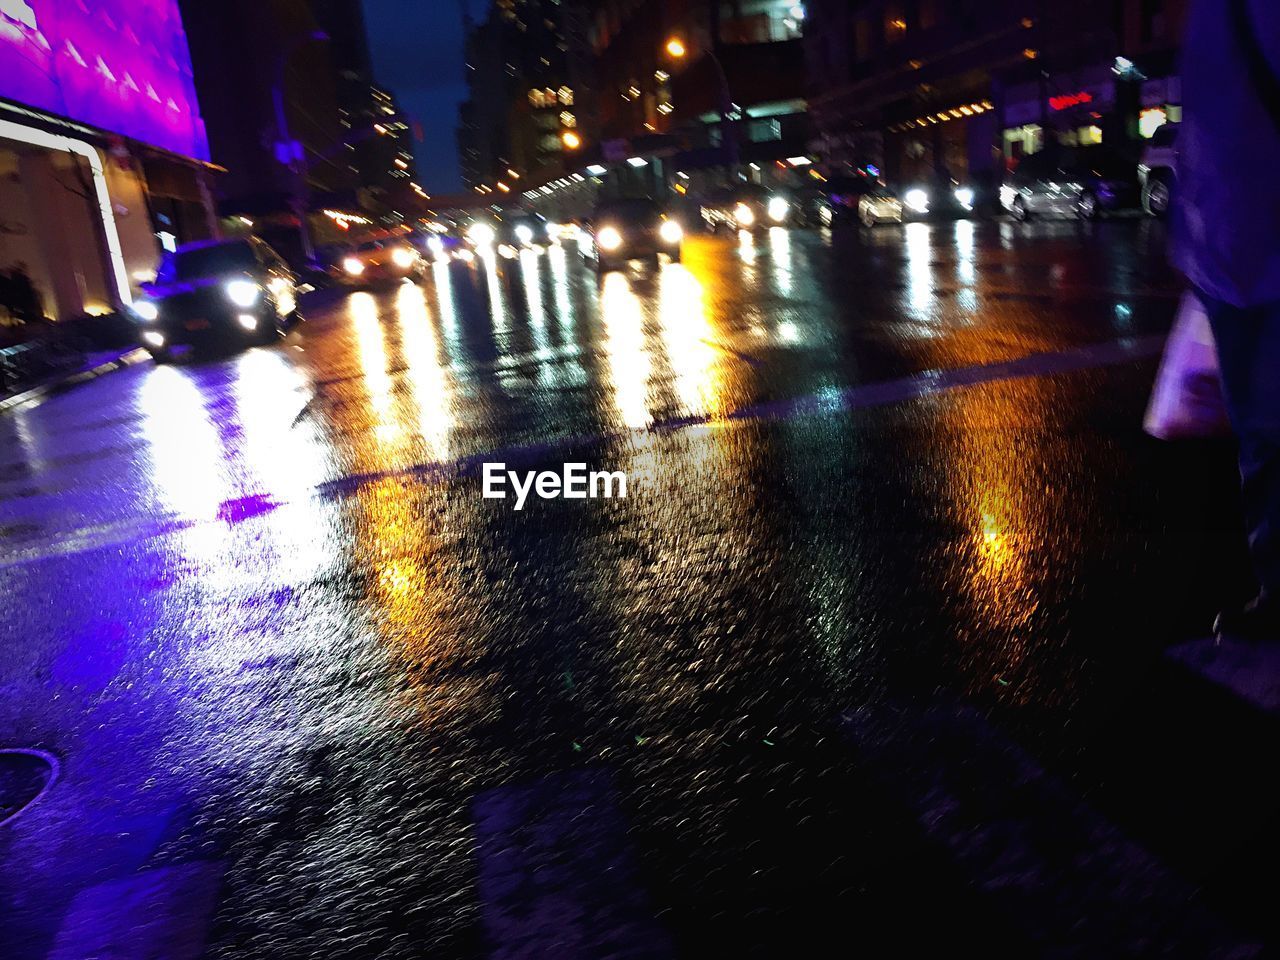 Illuminated vehicle headlights with reflection on wet city street